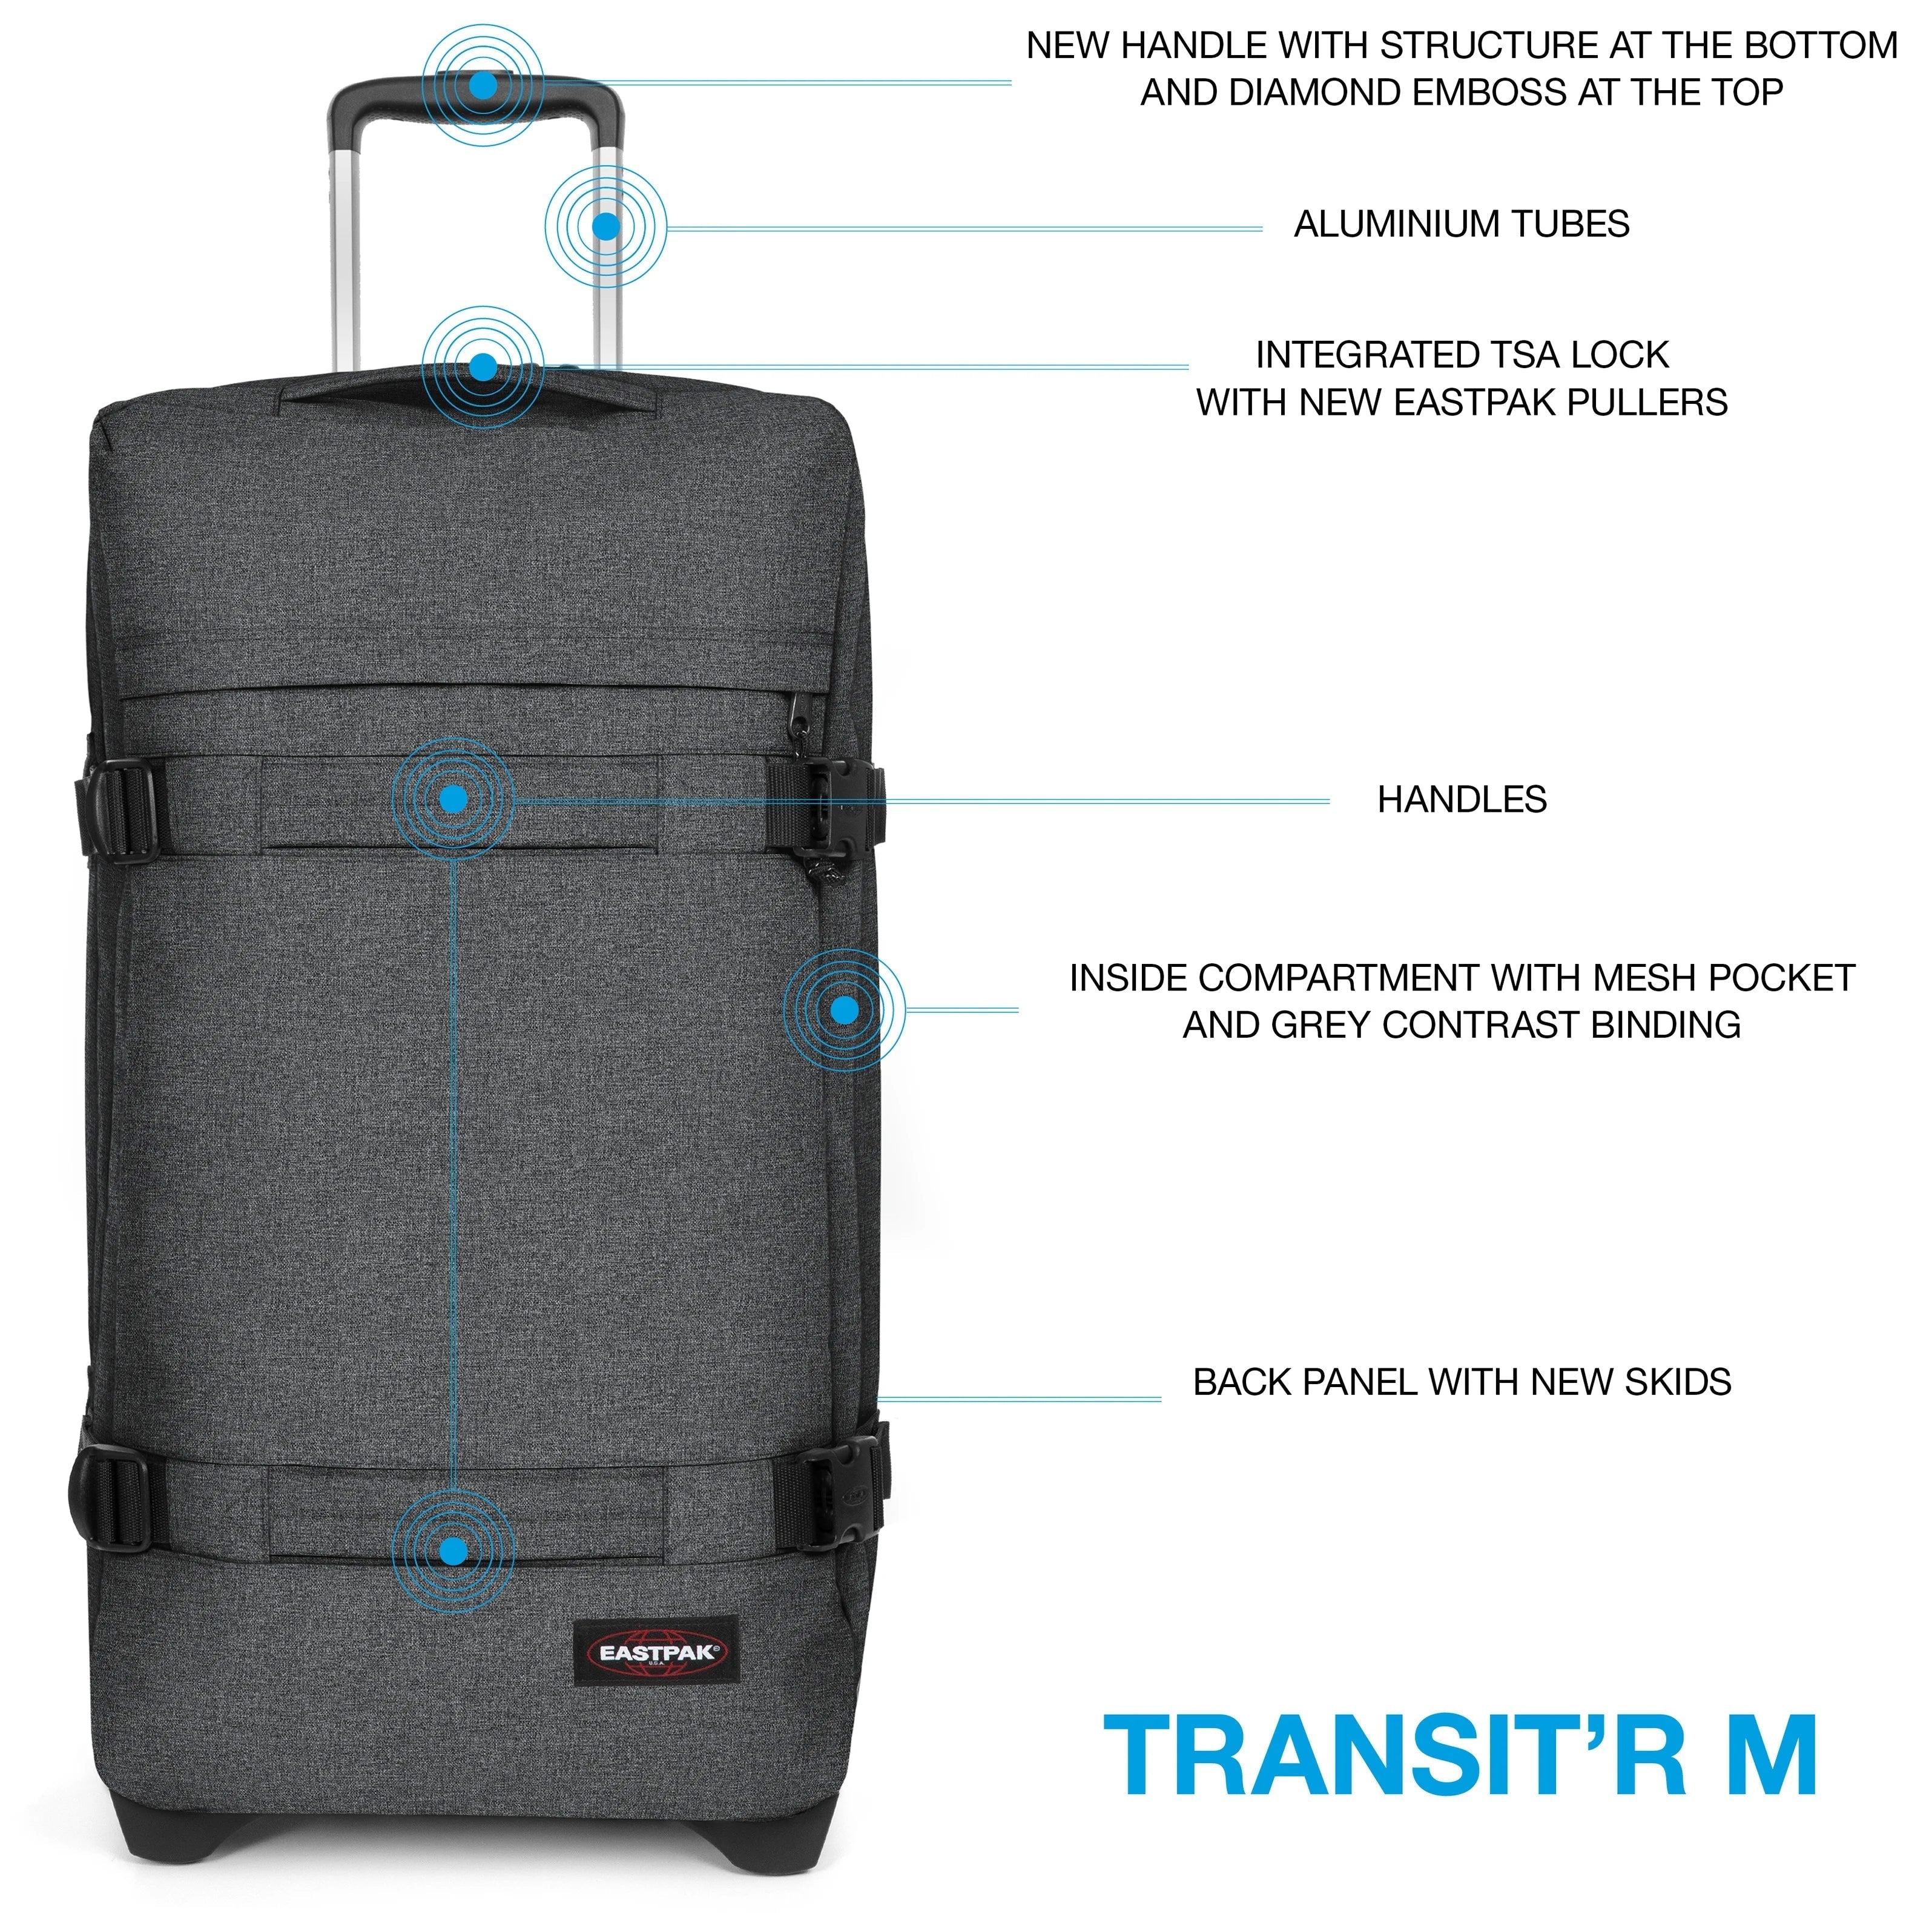 Eastpak Authentic Travel Transit'r M Rolling Travel Bag 67 cm - Triple Denim